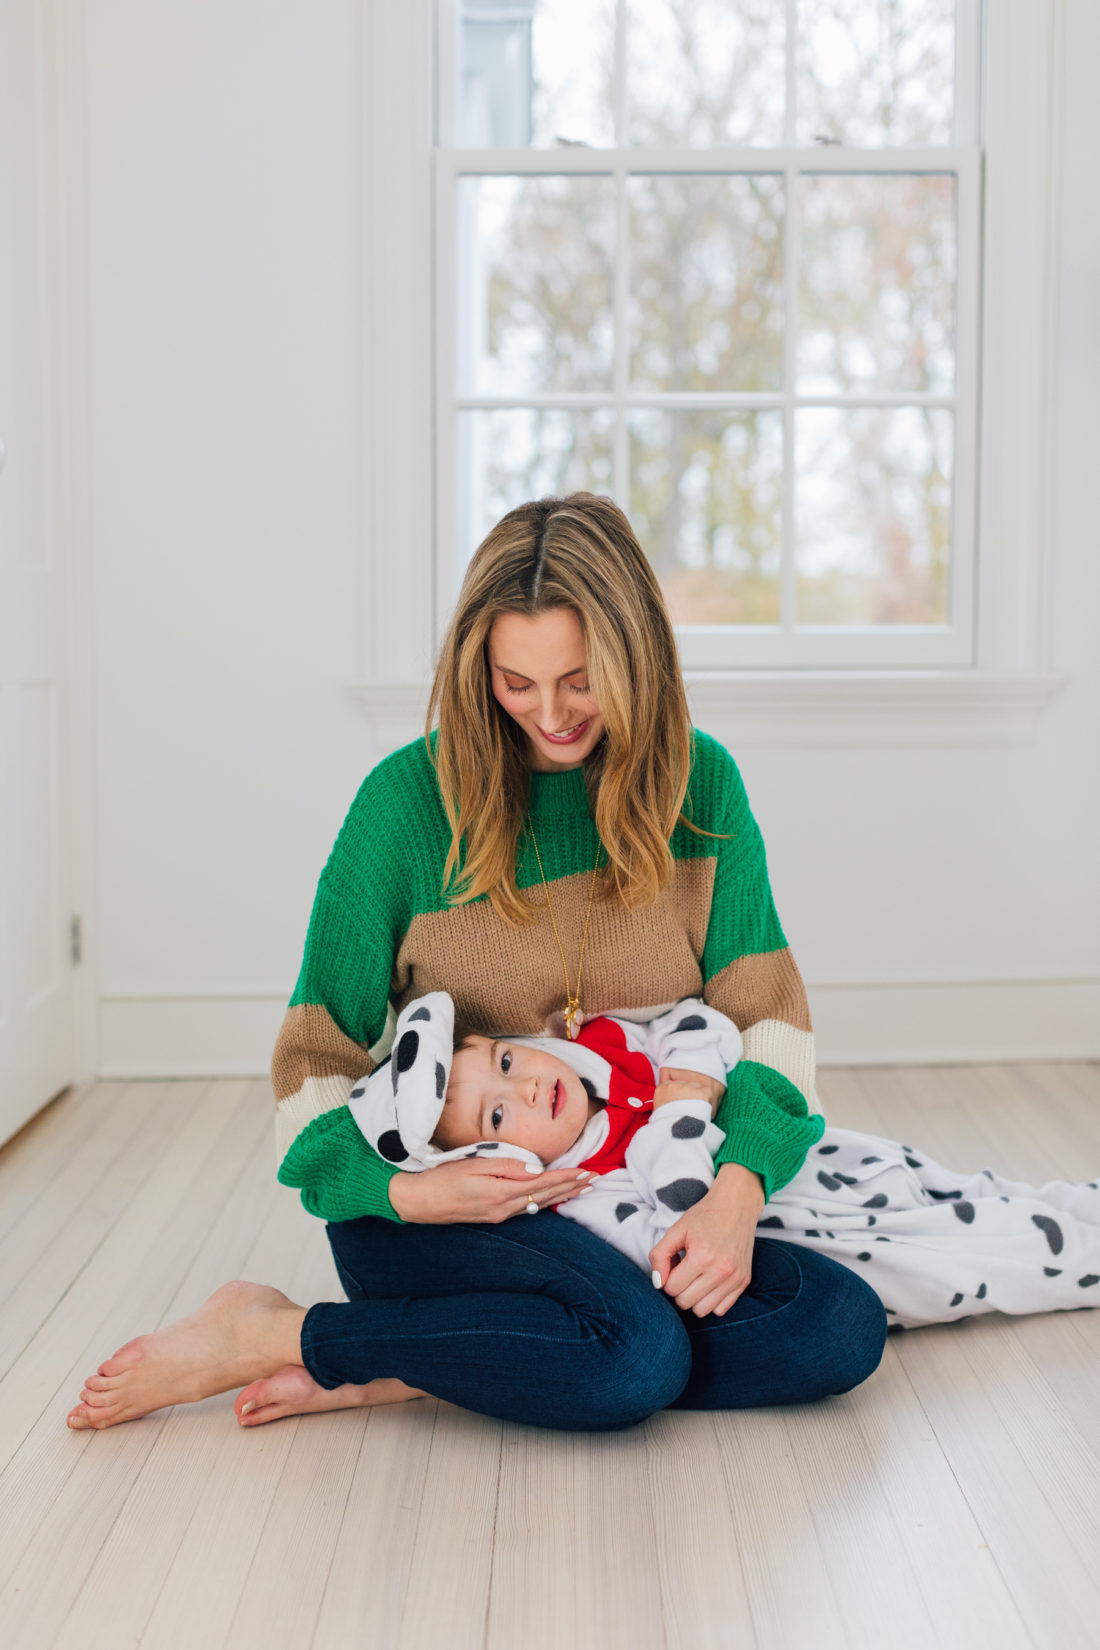 Eva Amurri hugs her son Major who is dressed in Dalmatian costumes